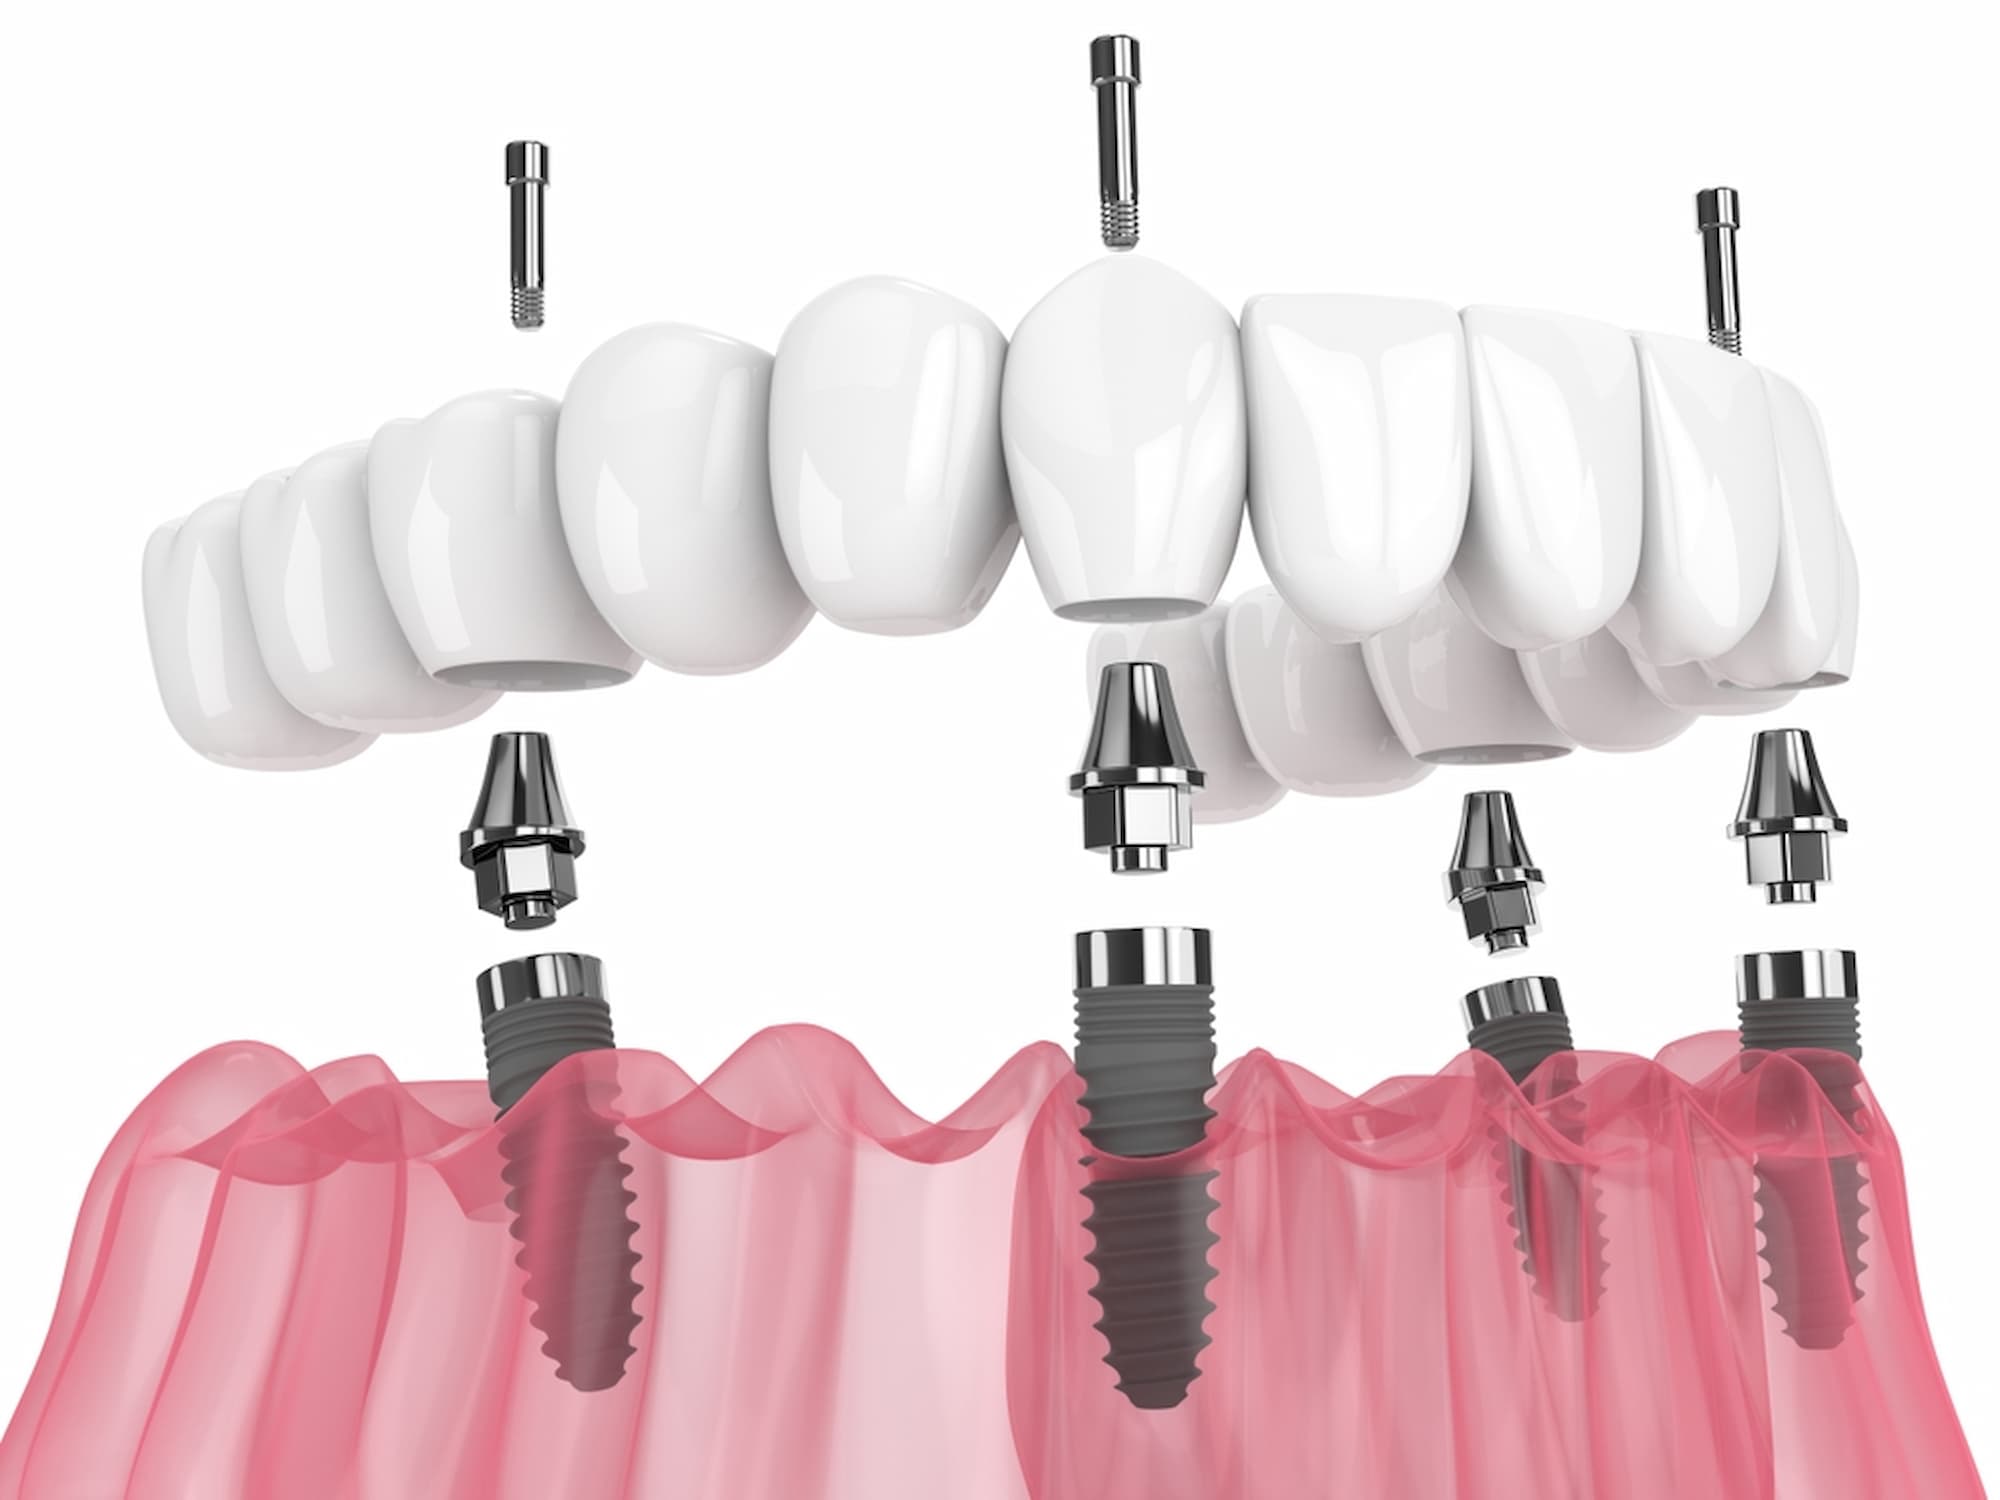 Dentures are popular teeth implants in Thailand.